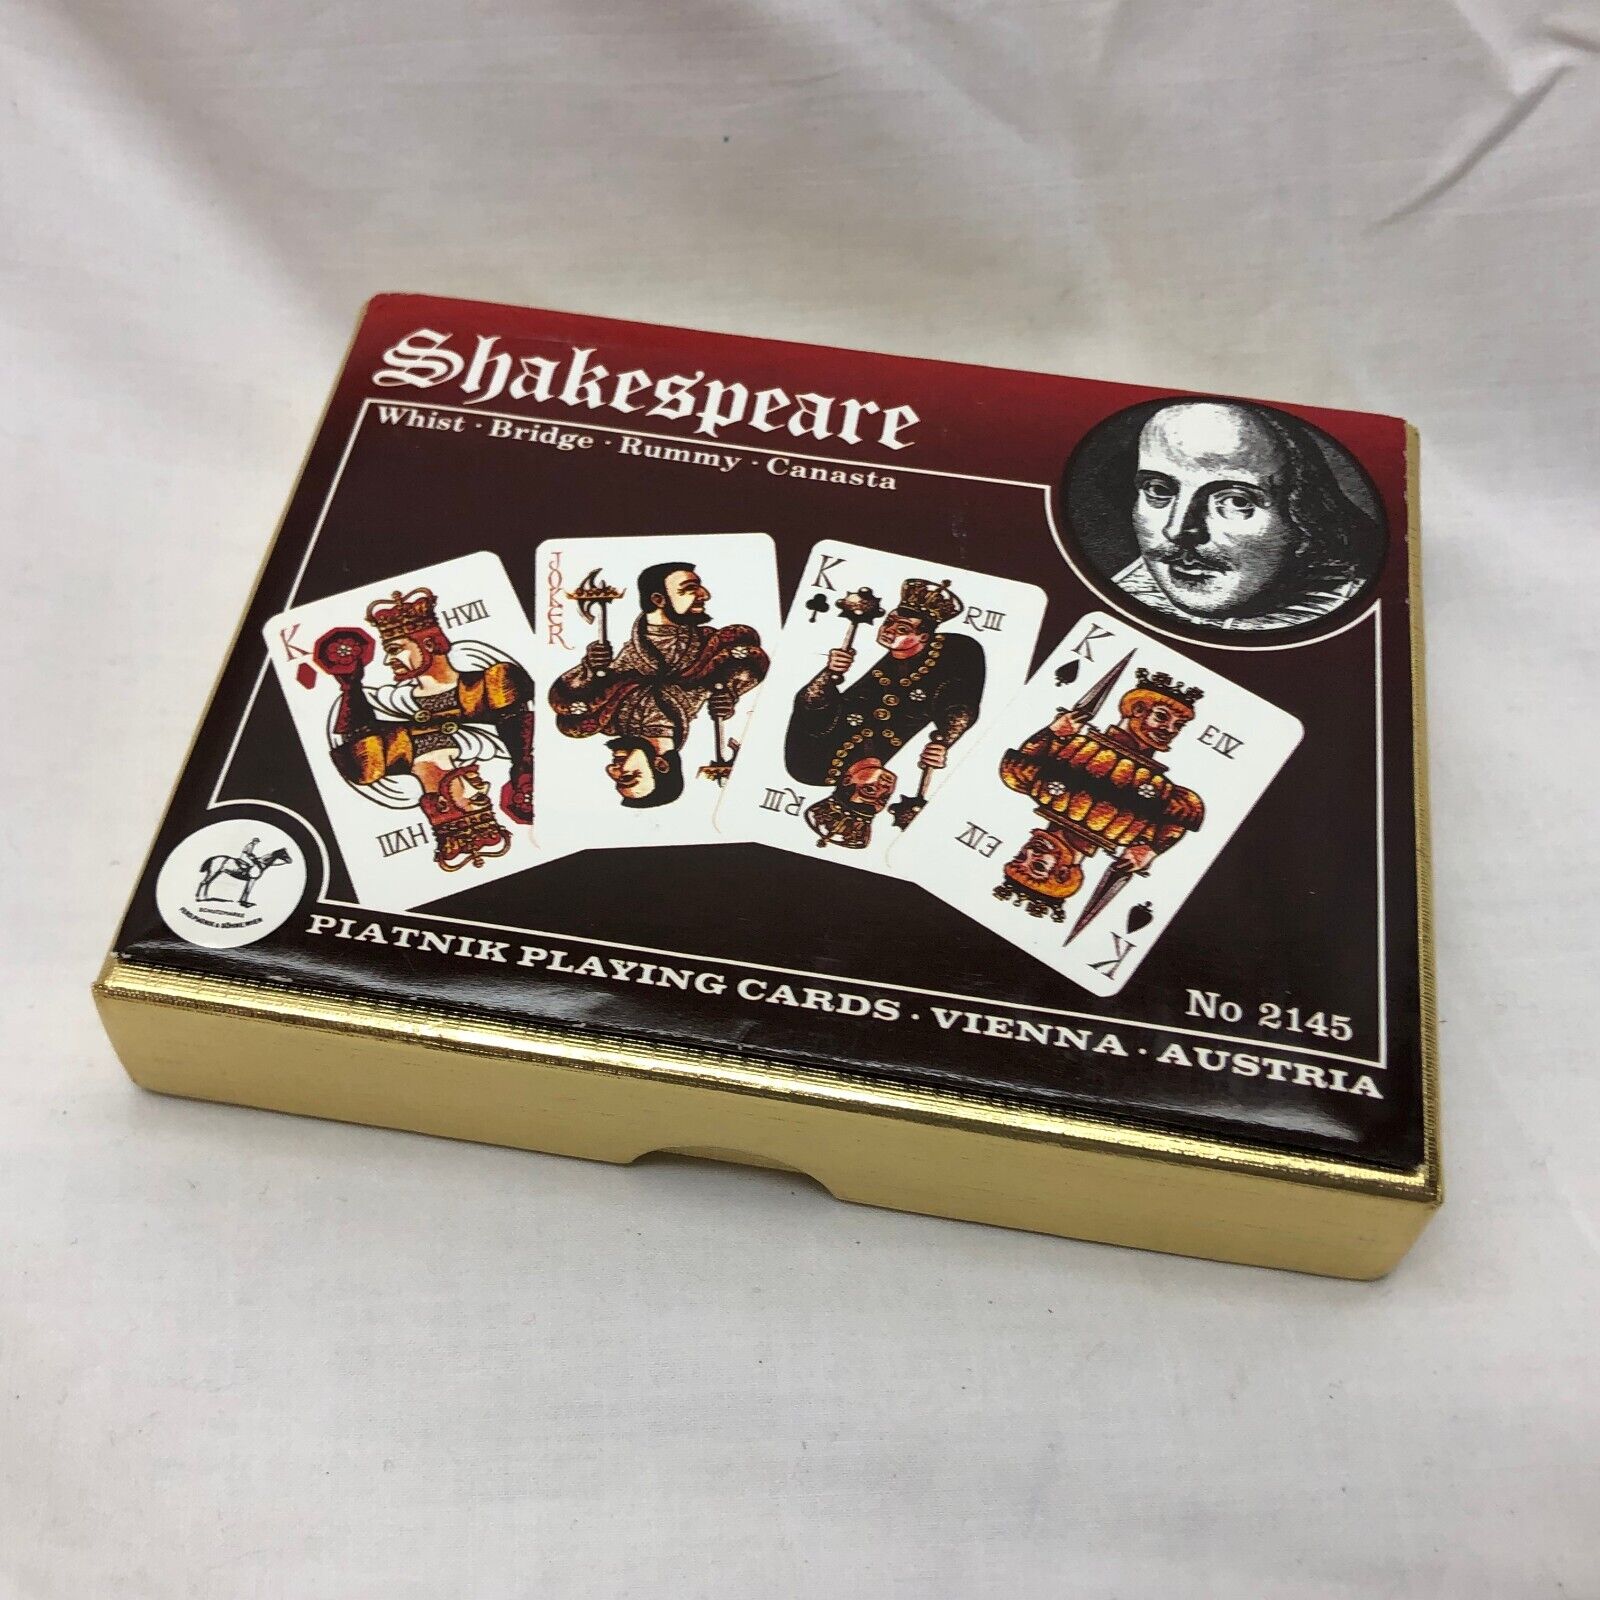 Vintage Shakespeare Piatnik Playing Card Set, 2 decks Complete